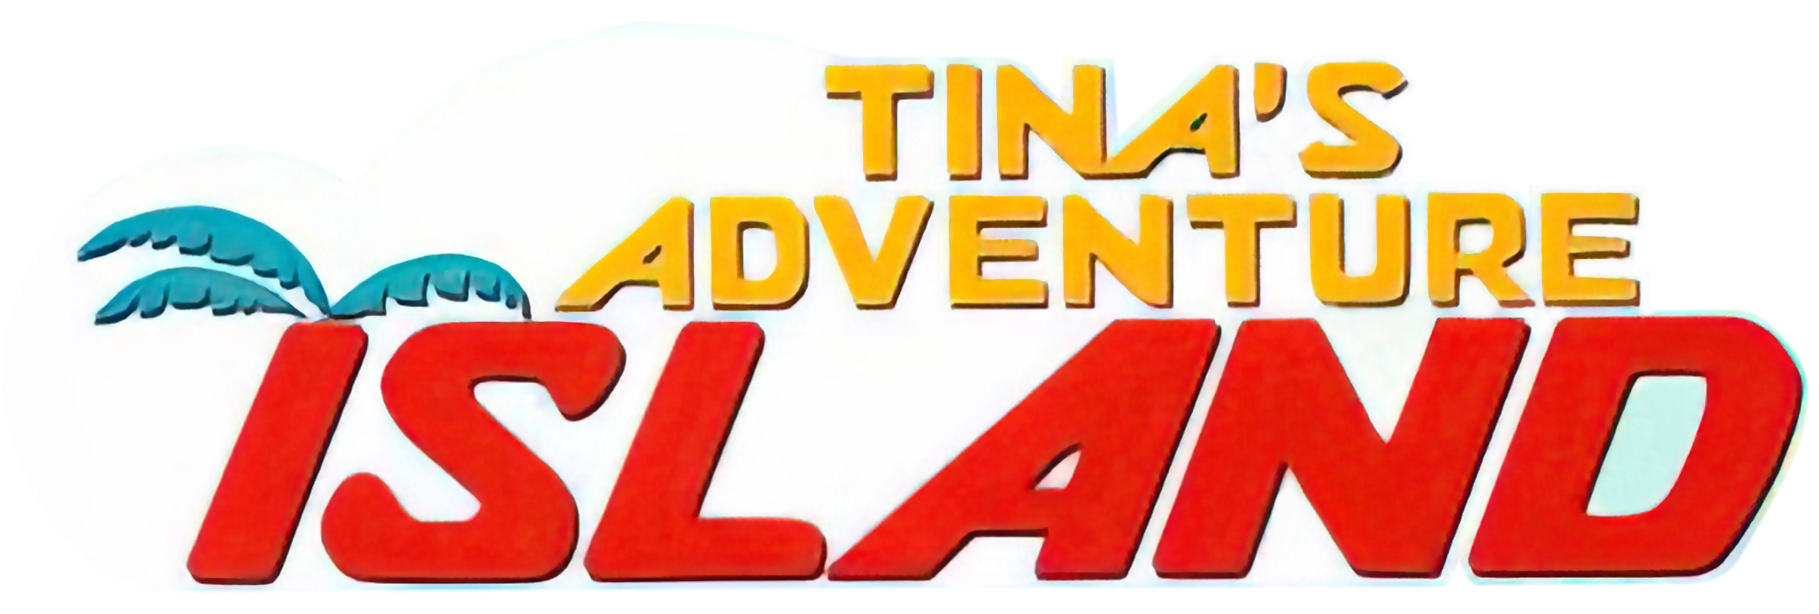 Tina's Adventure Island Images - LaunchBox Games Database